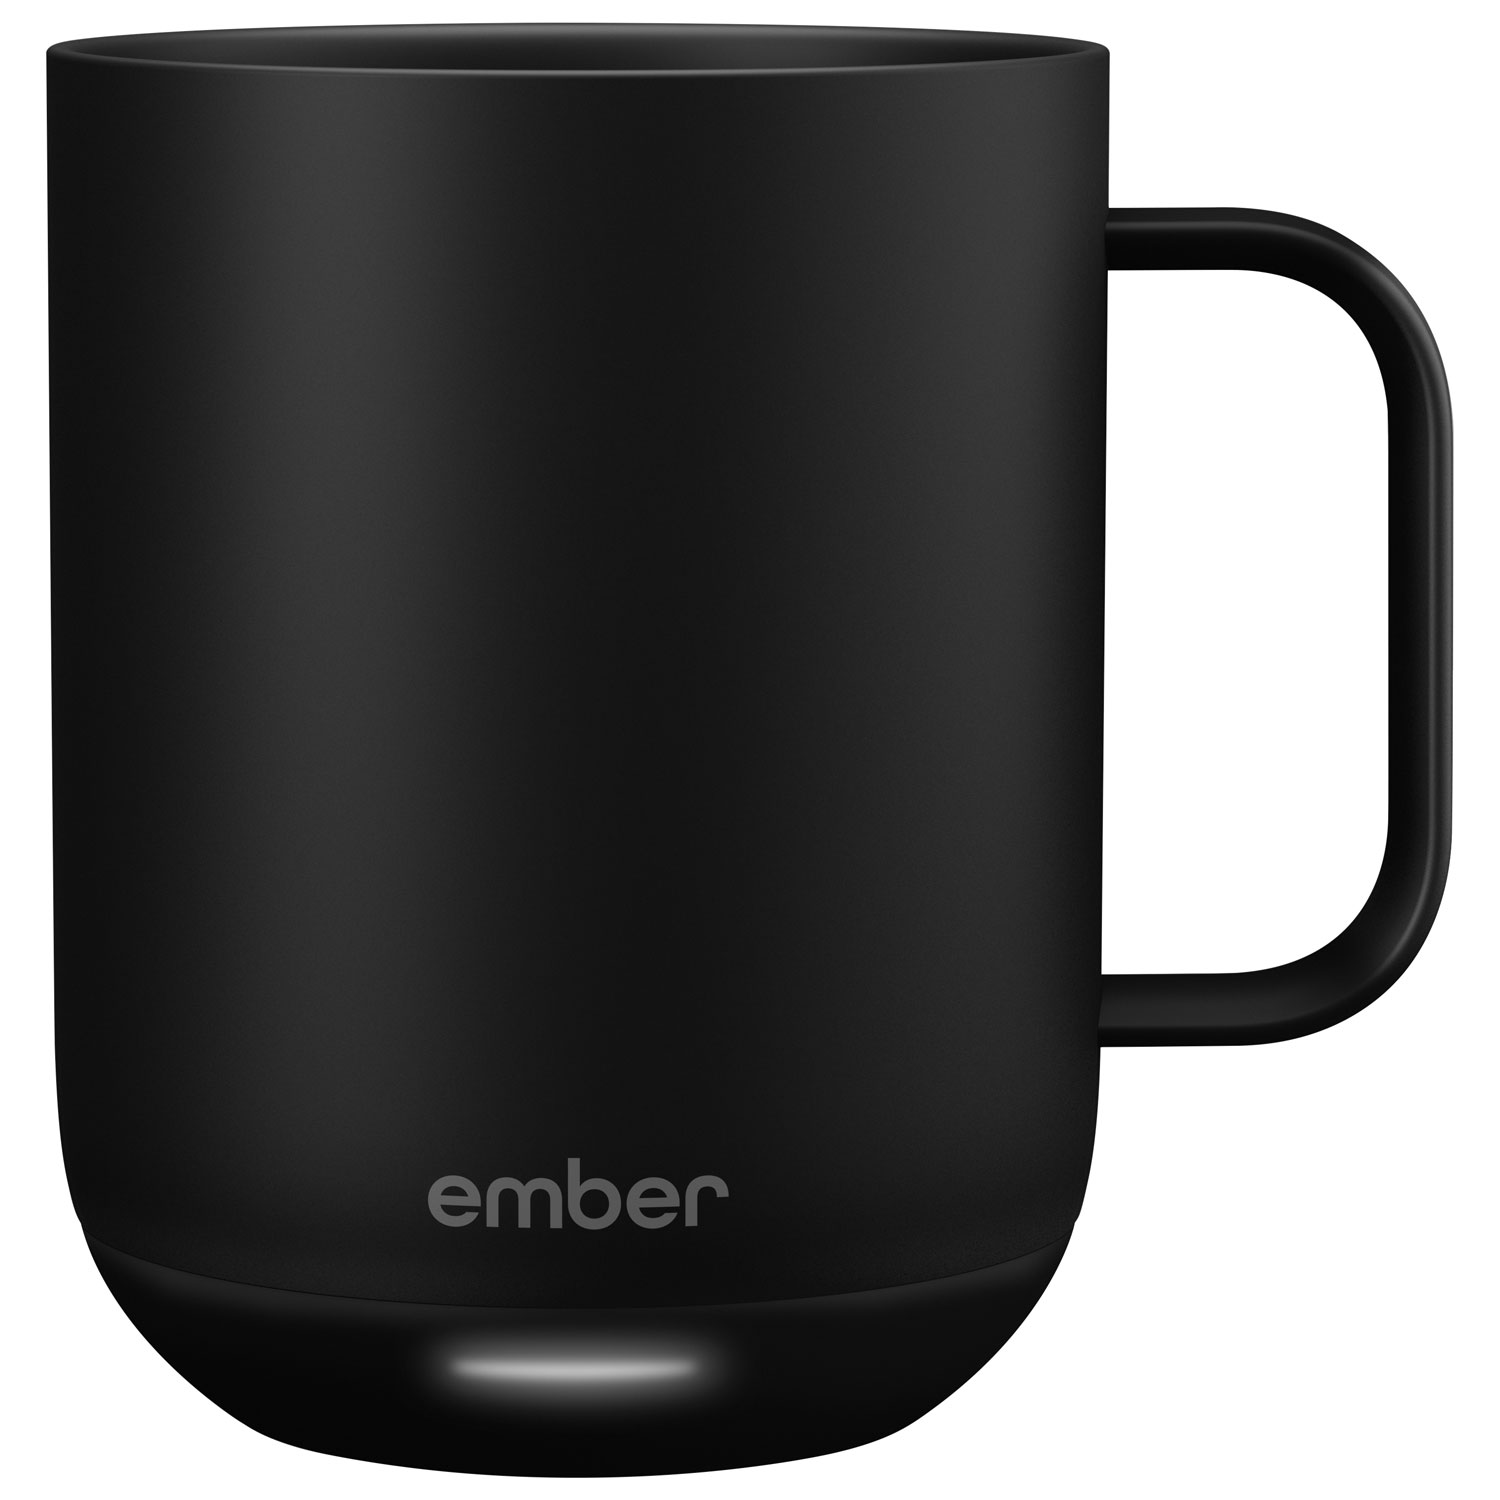 Ember 295ml (10 oz.) Smart Temperature Control Mug 2 - Black